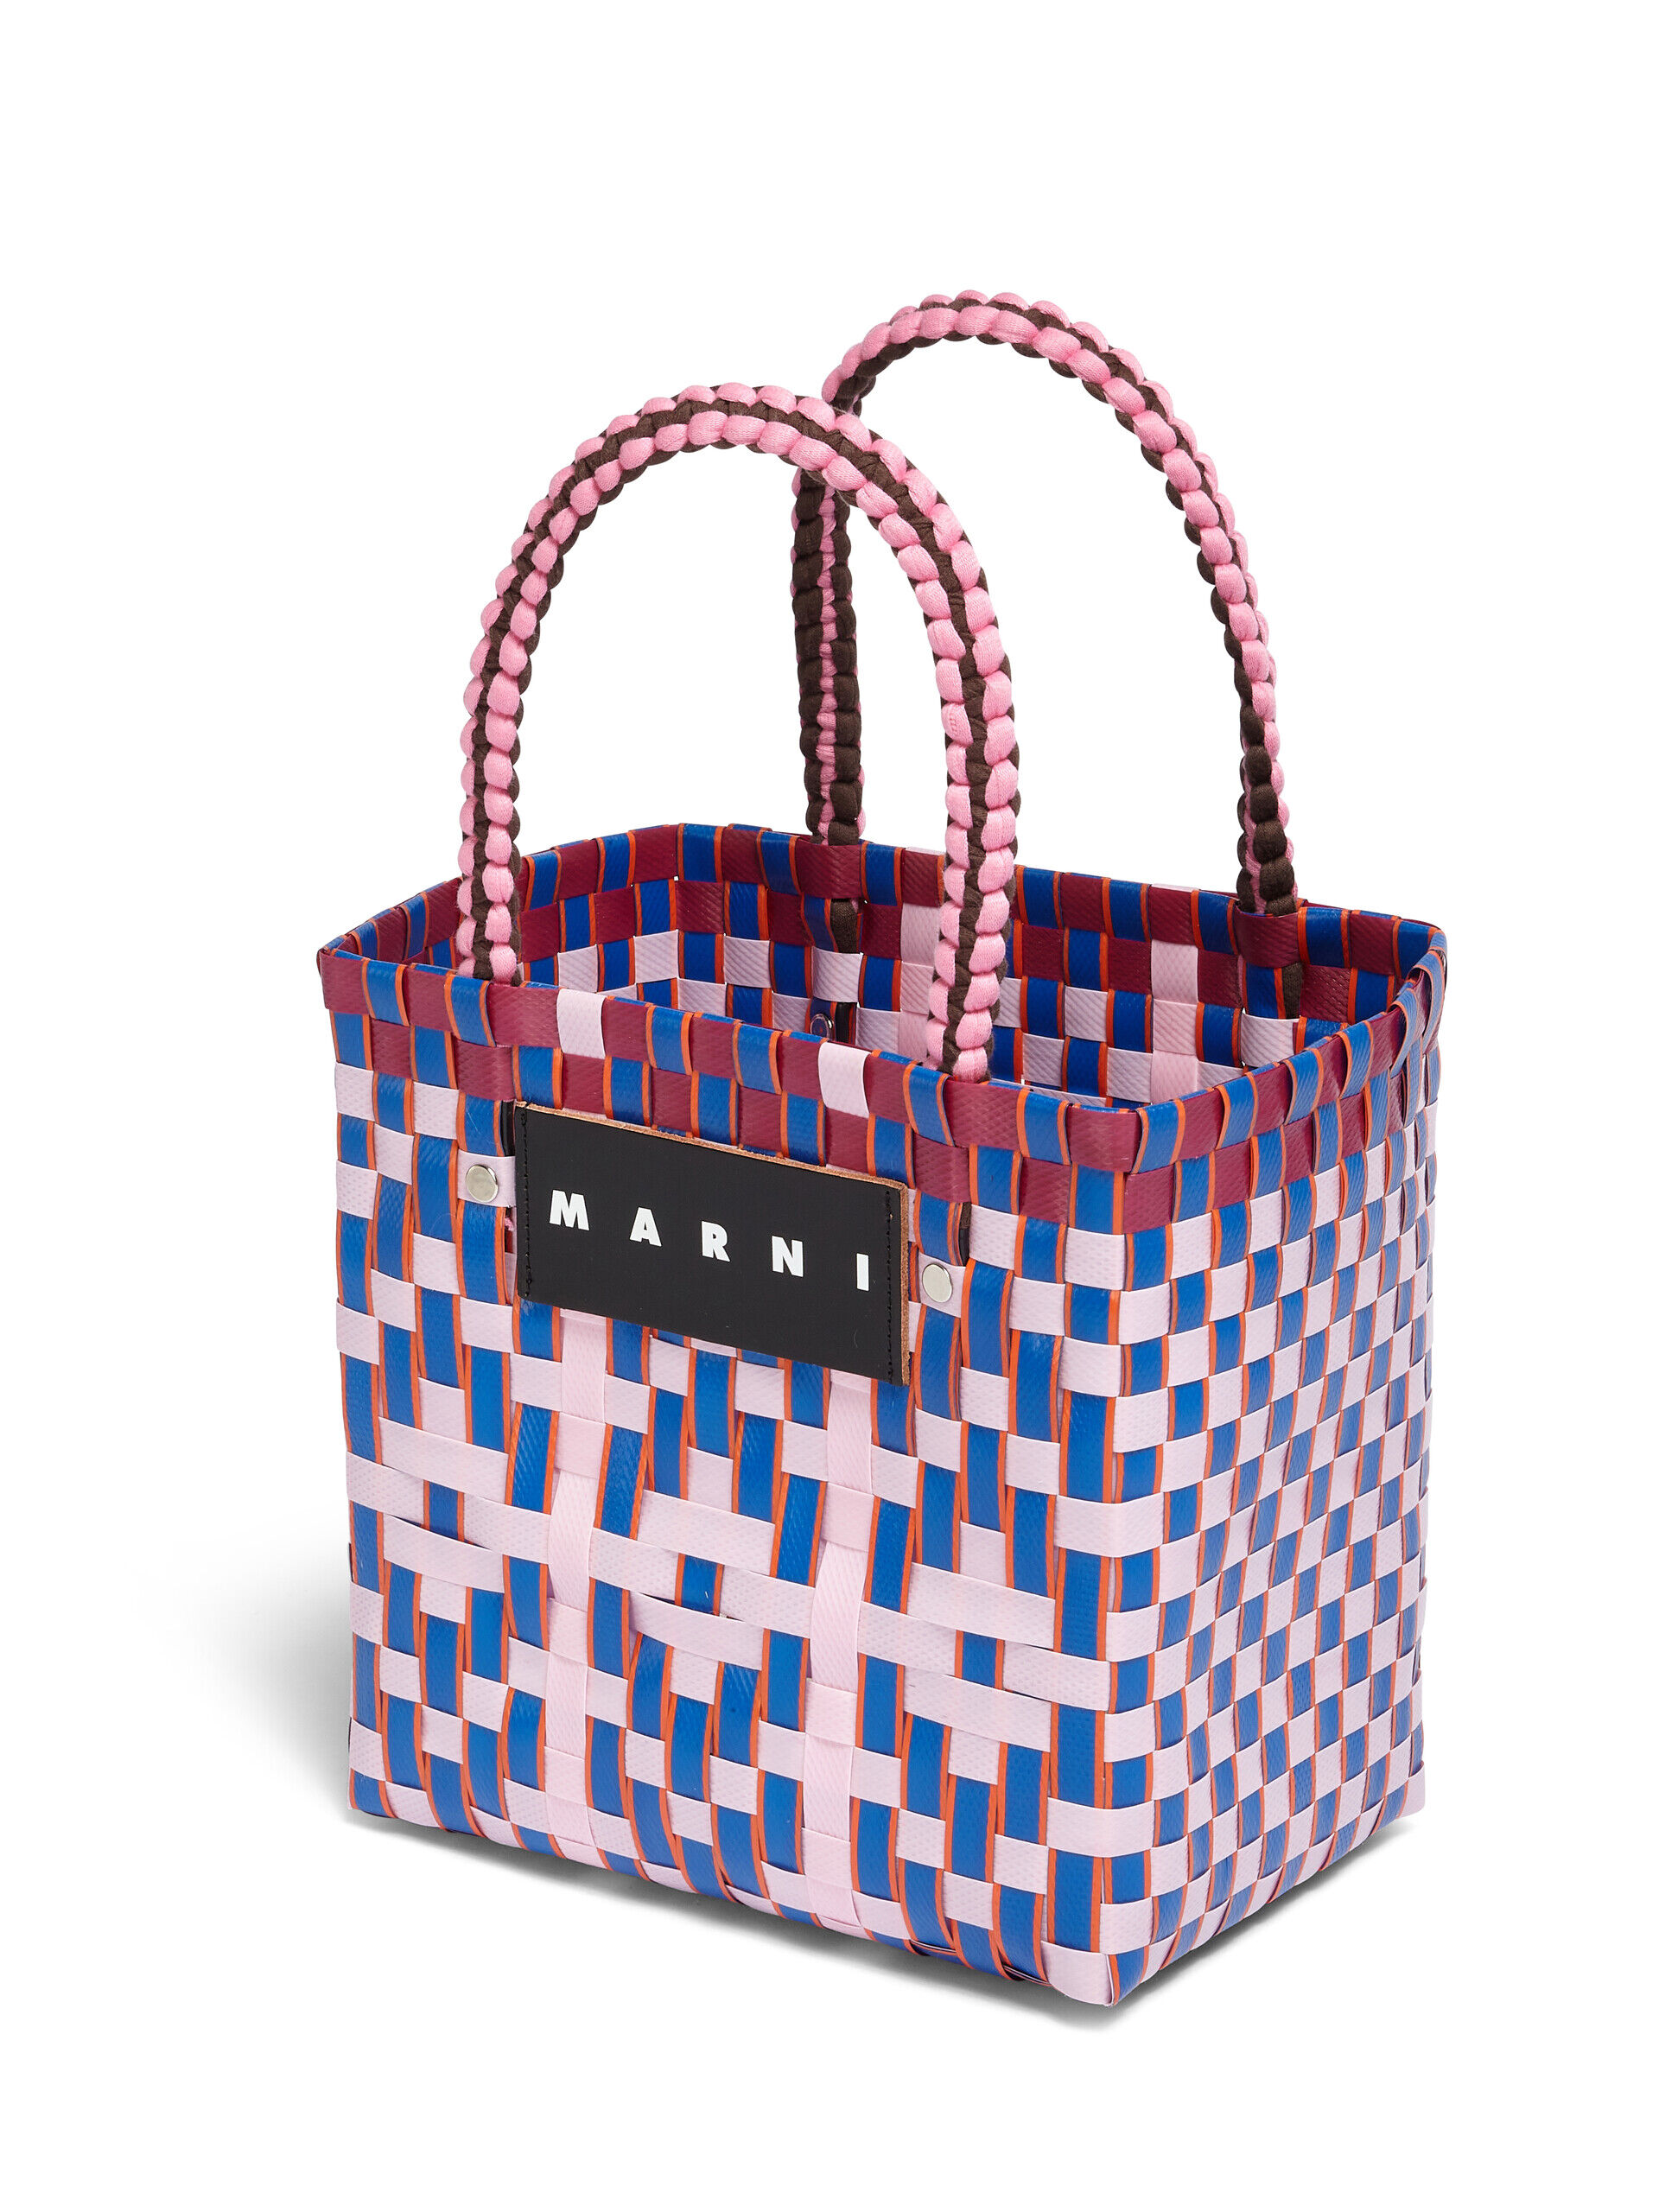 MARNI MARKET BASKET bag in pink diamond woven material | Marni